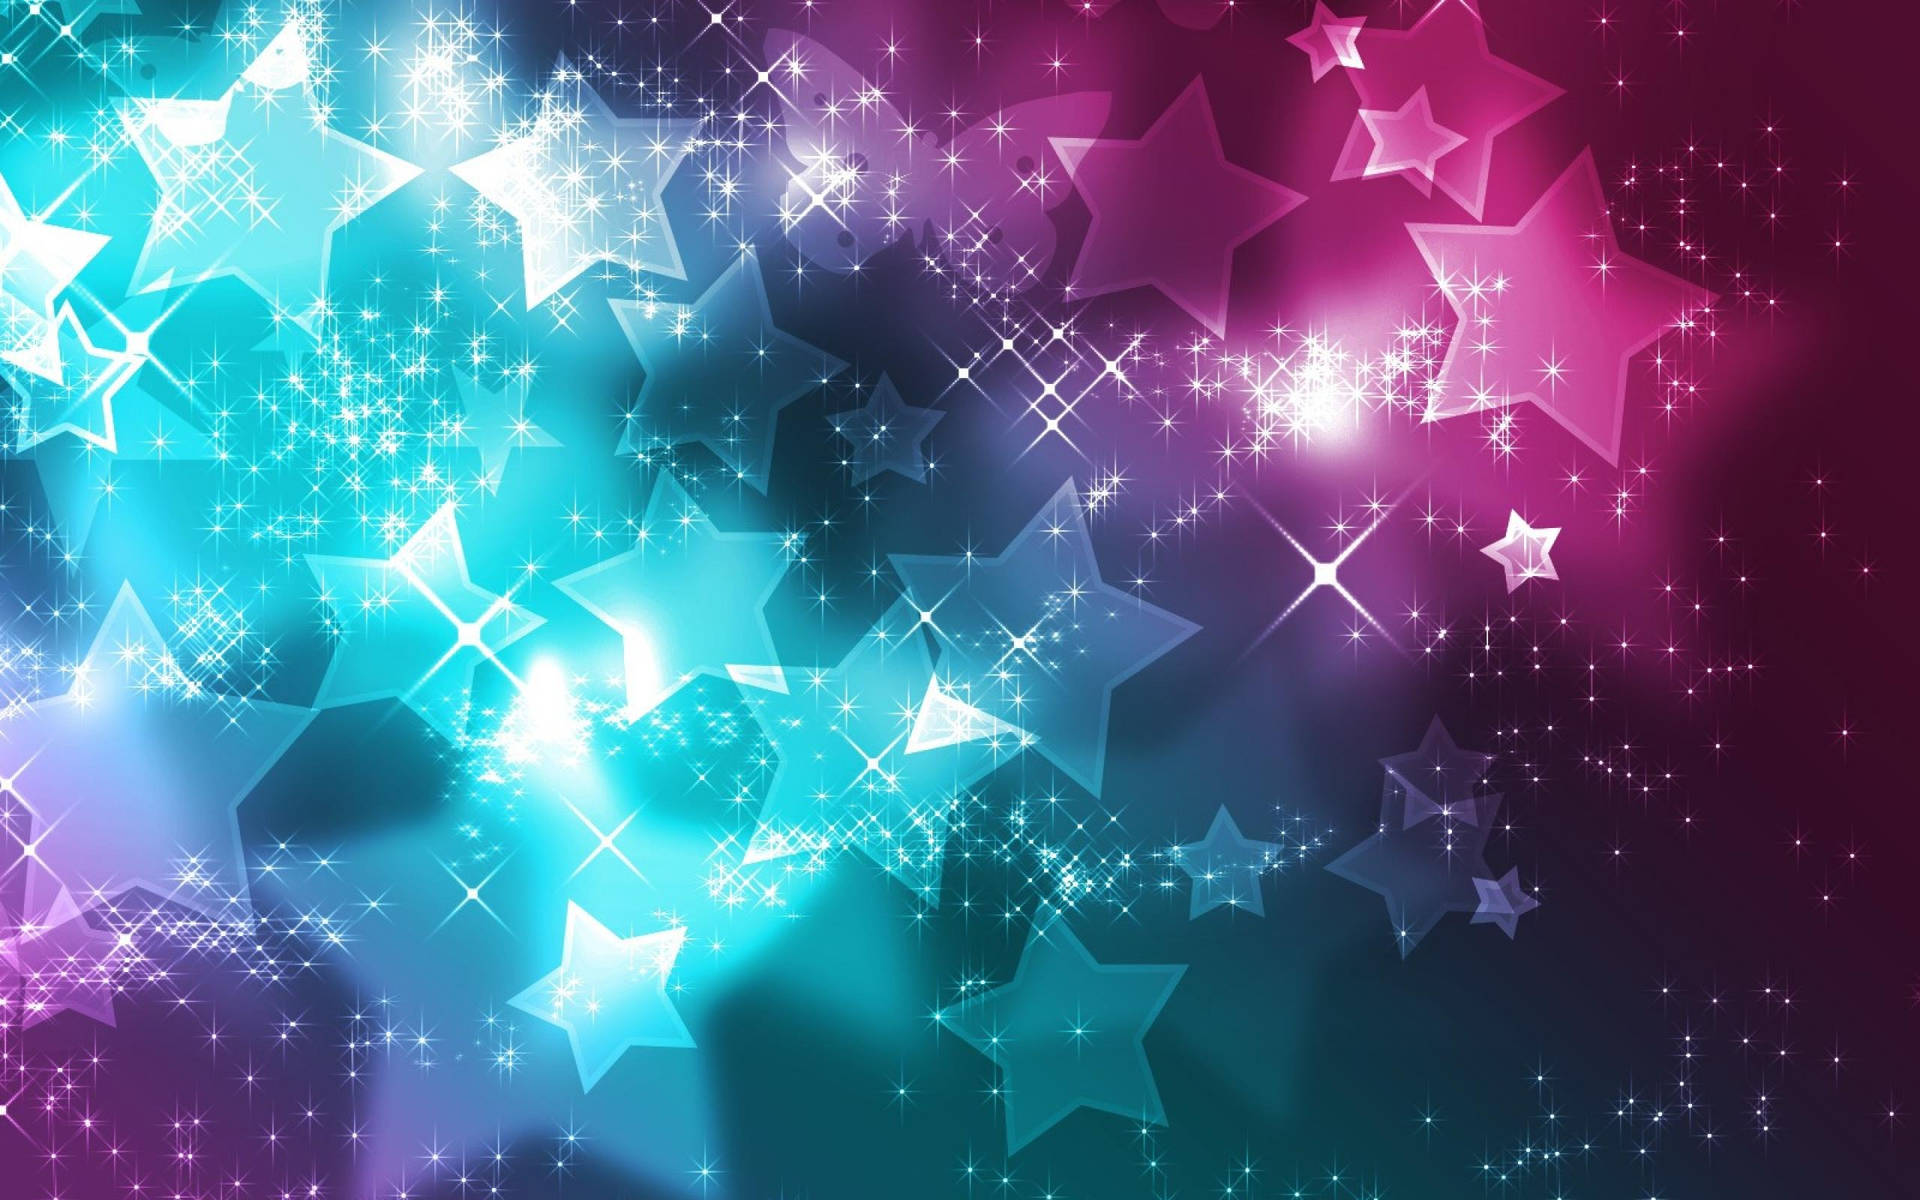 Sparkly stars design wallpaper